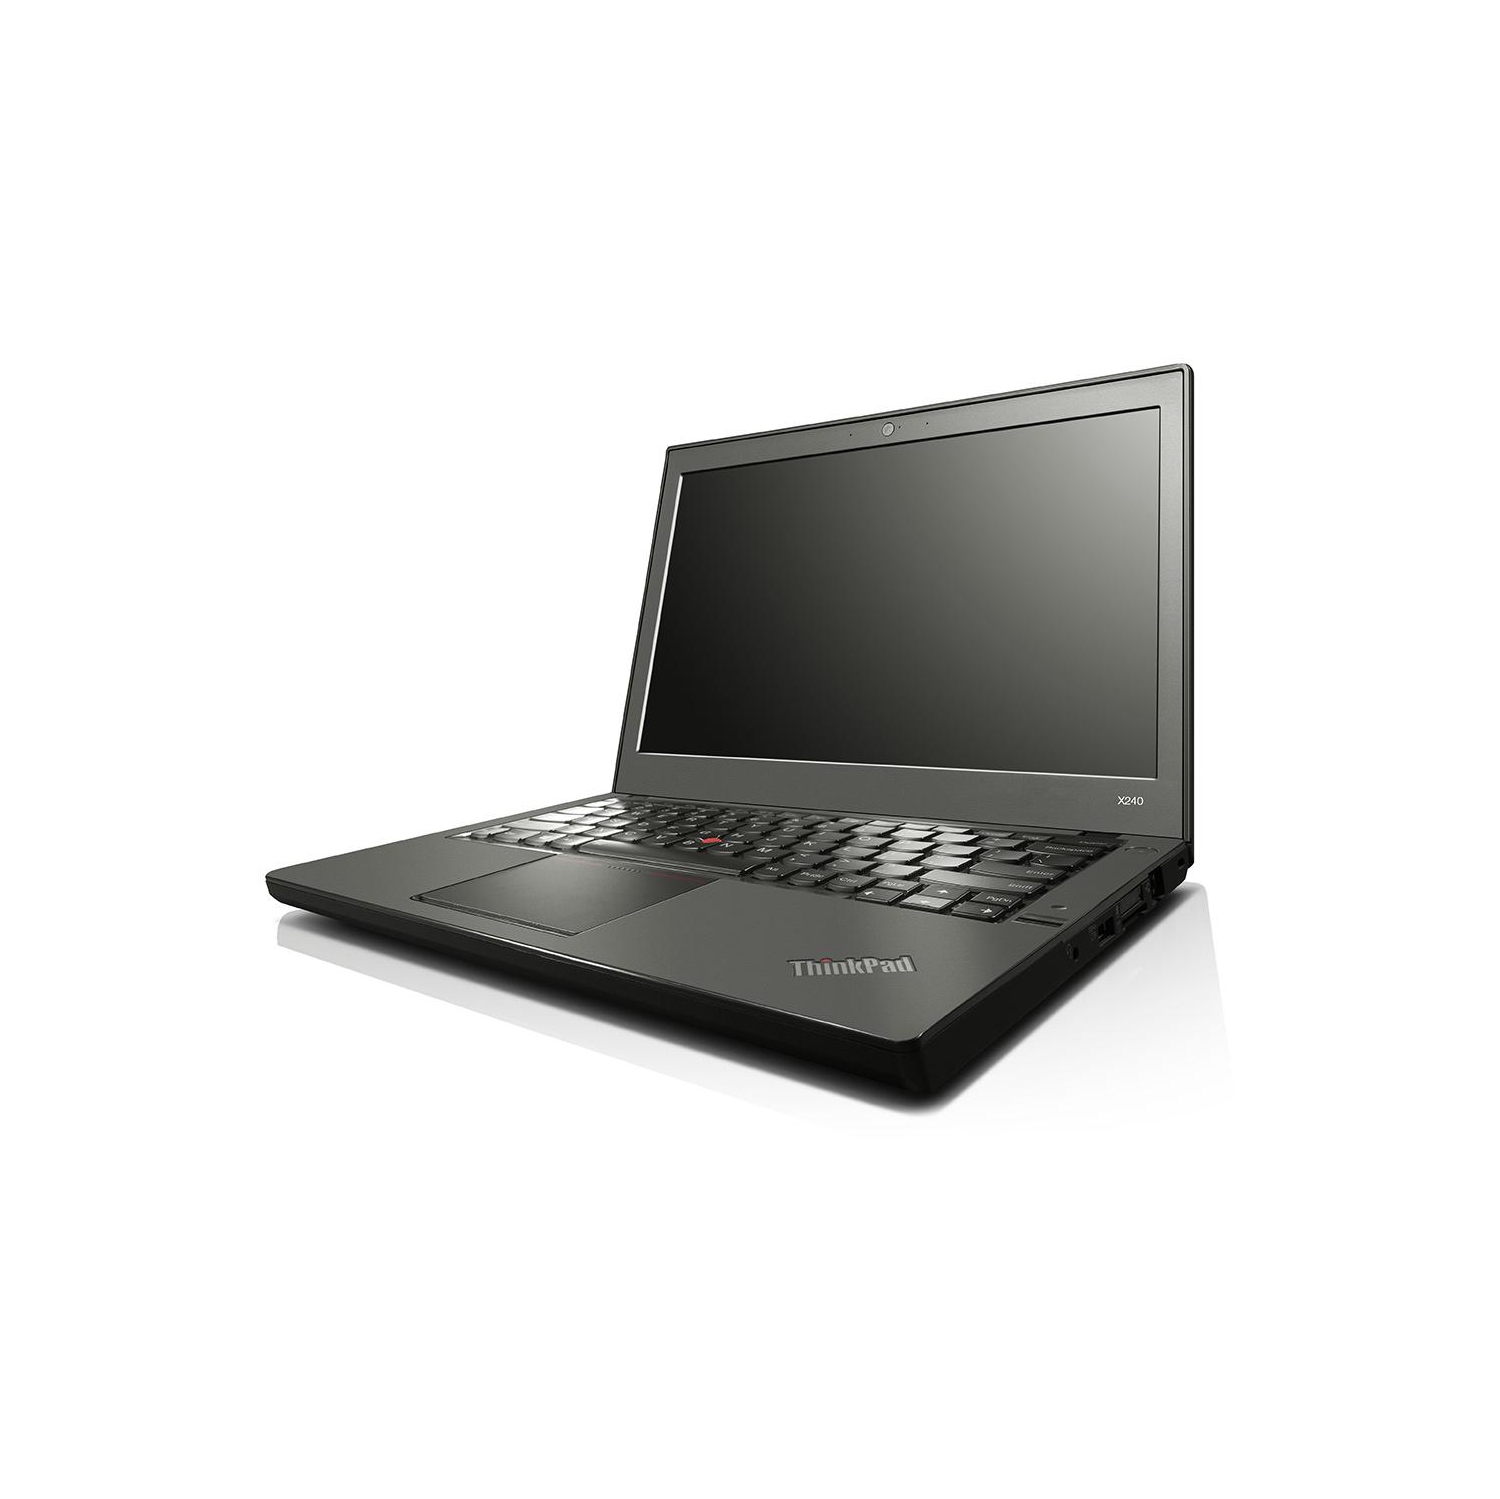 Refurbished (Good) - Lenovo Thinkpad X240 12.5" Laptop (Intel Core i7-4600U @ 2.1Ghz, 8GB RAM, 128GB SSD, WebCam, Windows 10 Pro)